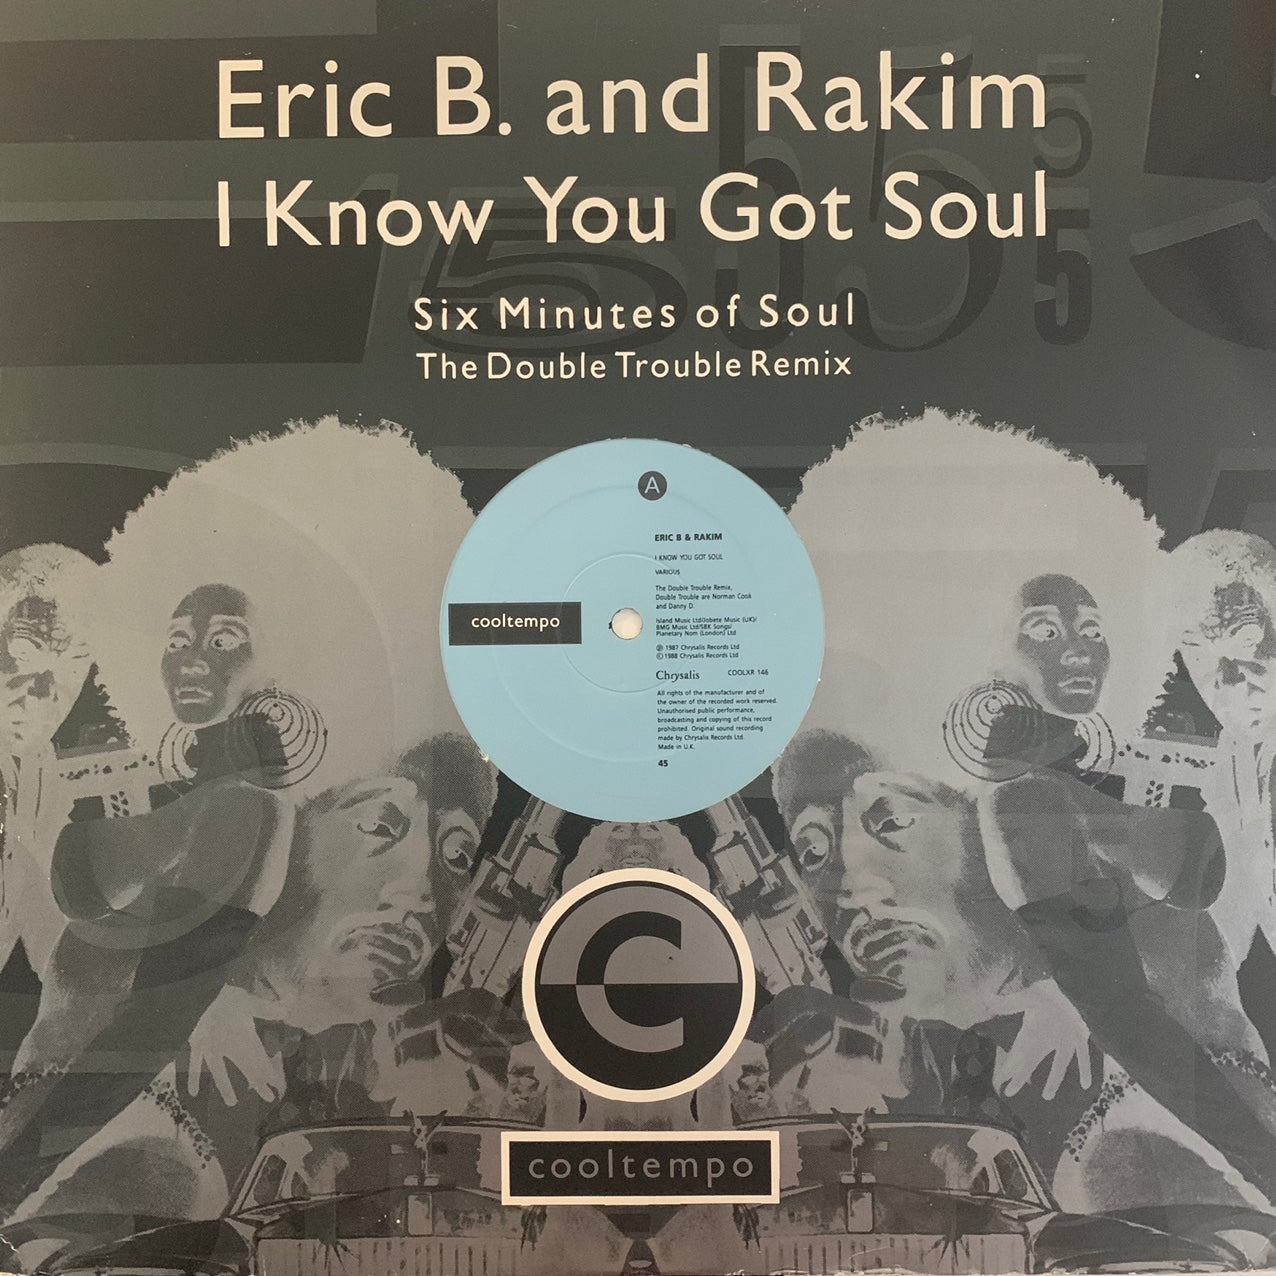 Eric B & Rakim “I know You Got Soul” 3 Track 12inch Vinyl